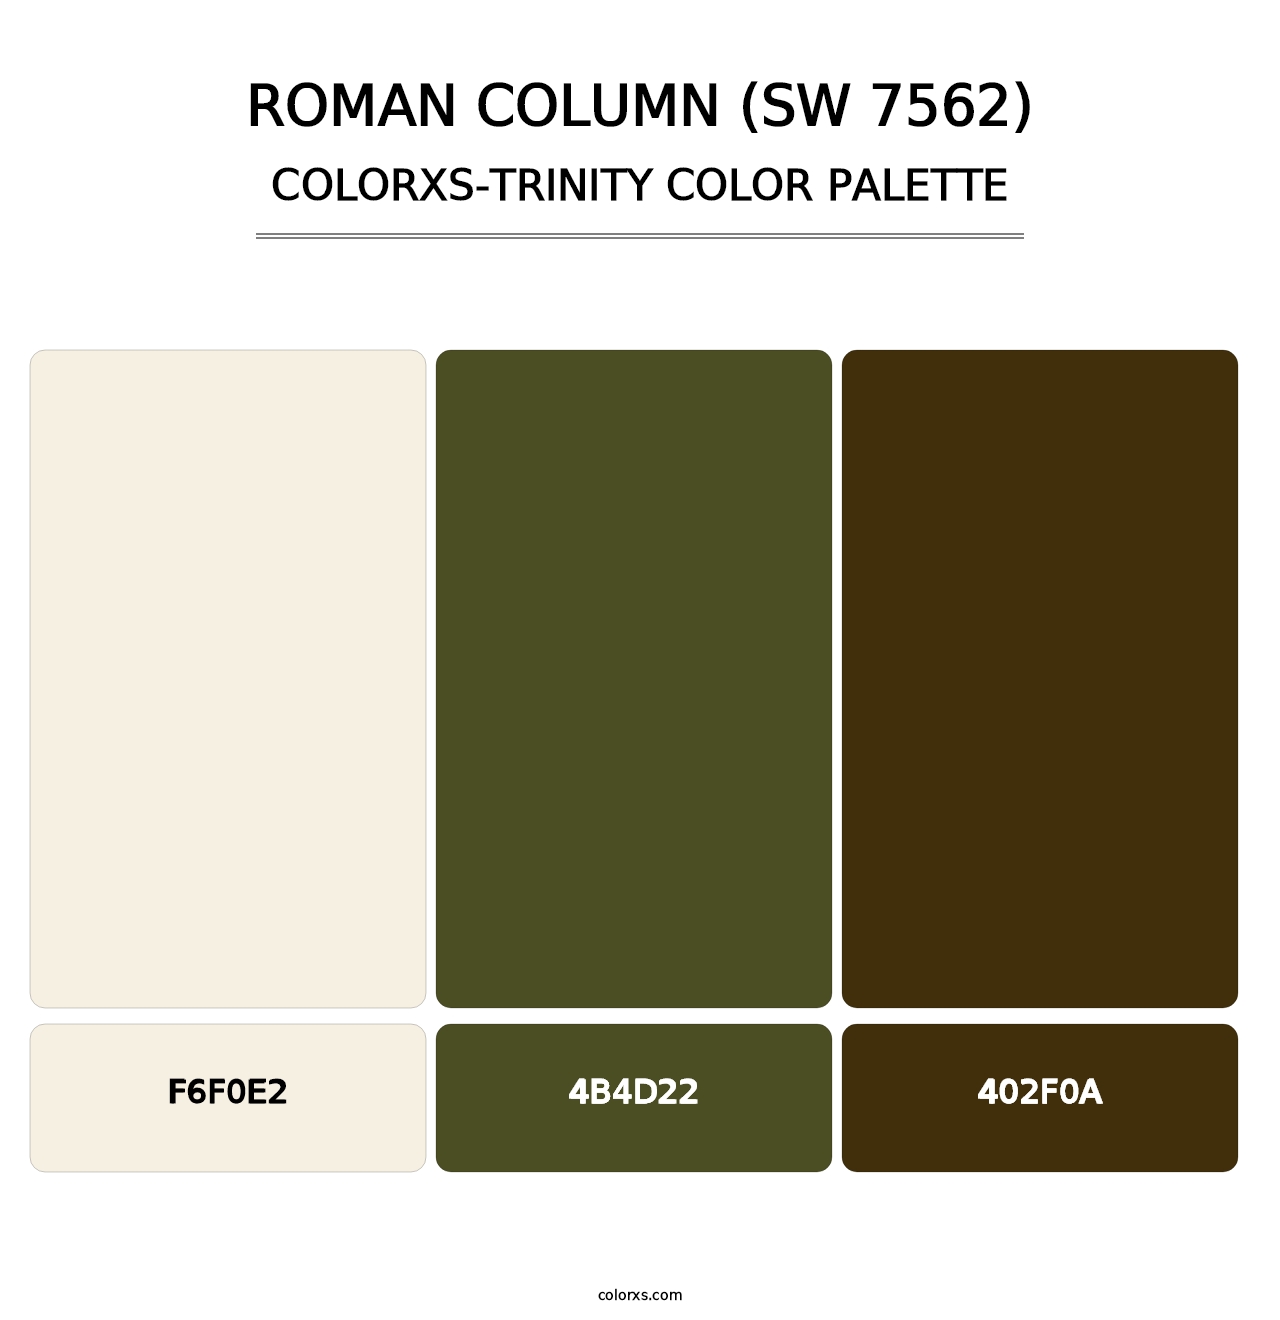 Roman Column (SW 7562) - Colorxs Trinity Palette